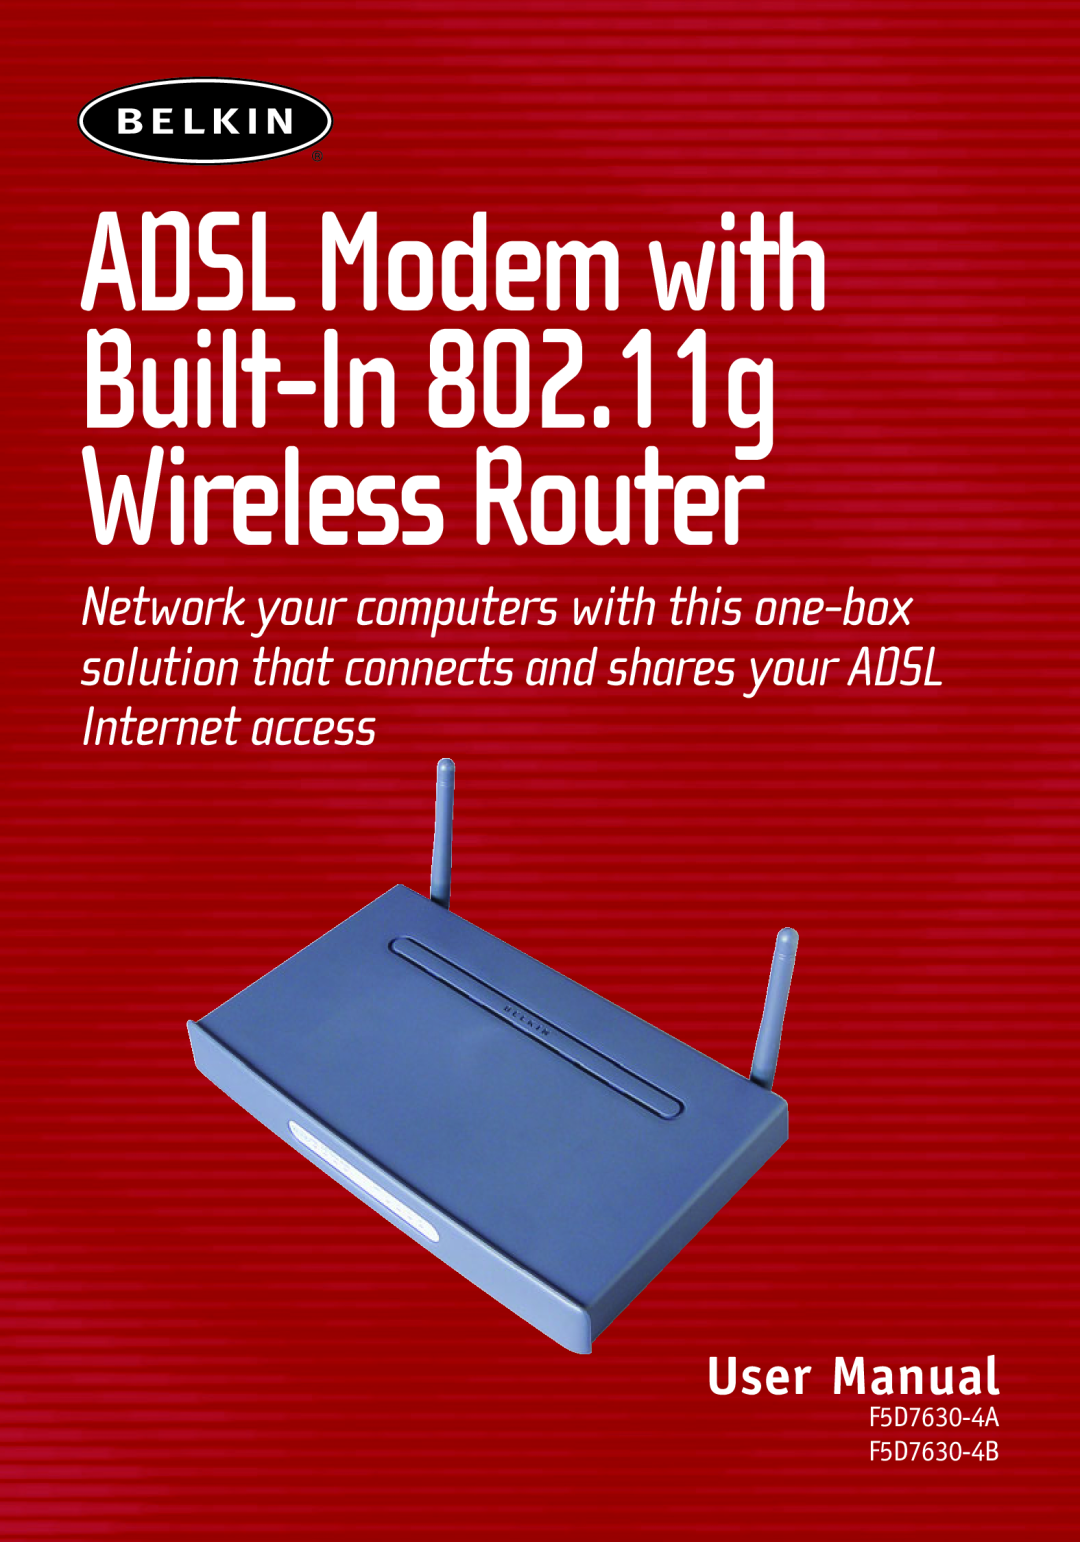 Belkin user manual ADSL Modem with Built-In 802.11g Wireless Router, User Manual, F5D7630-4A F5D7630-4B 